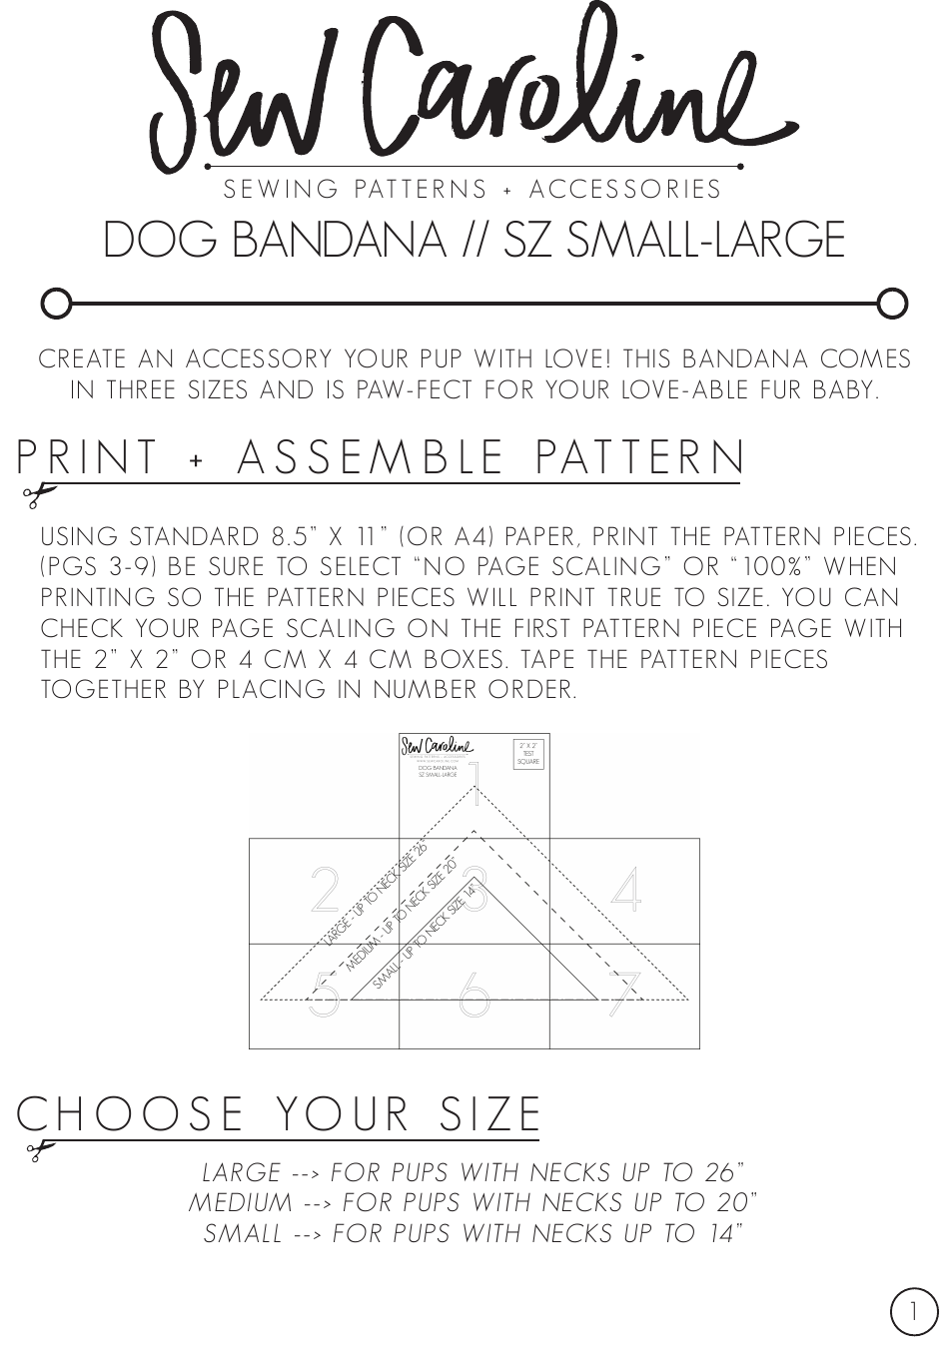 Dog bandana template - neatly folded black and white checkered design.